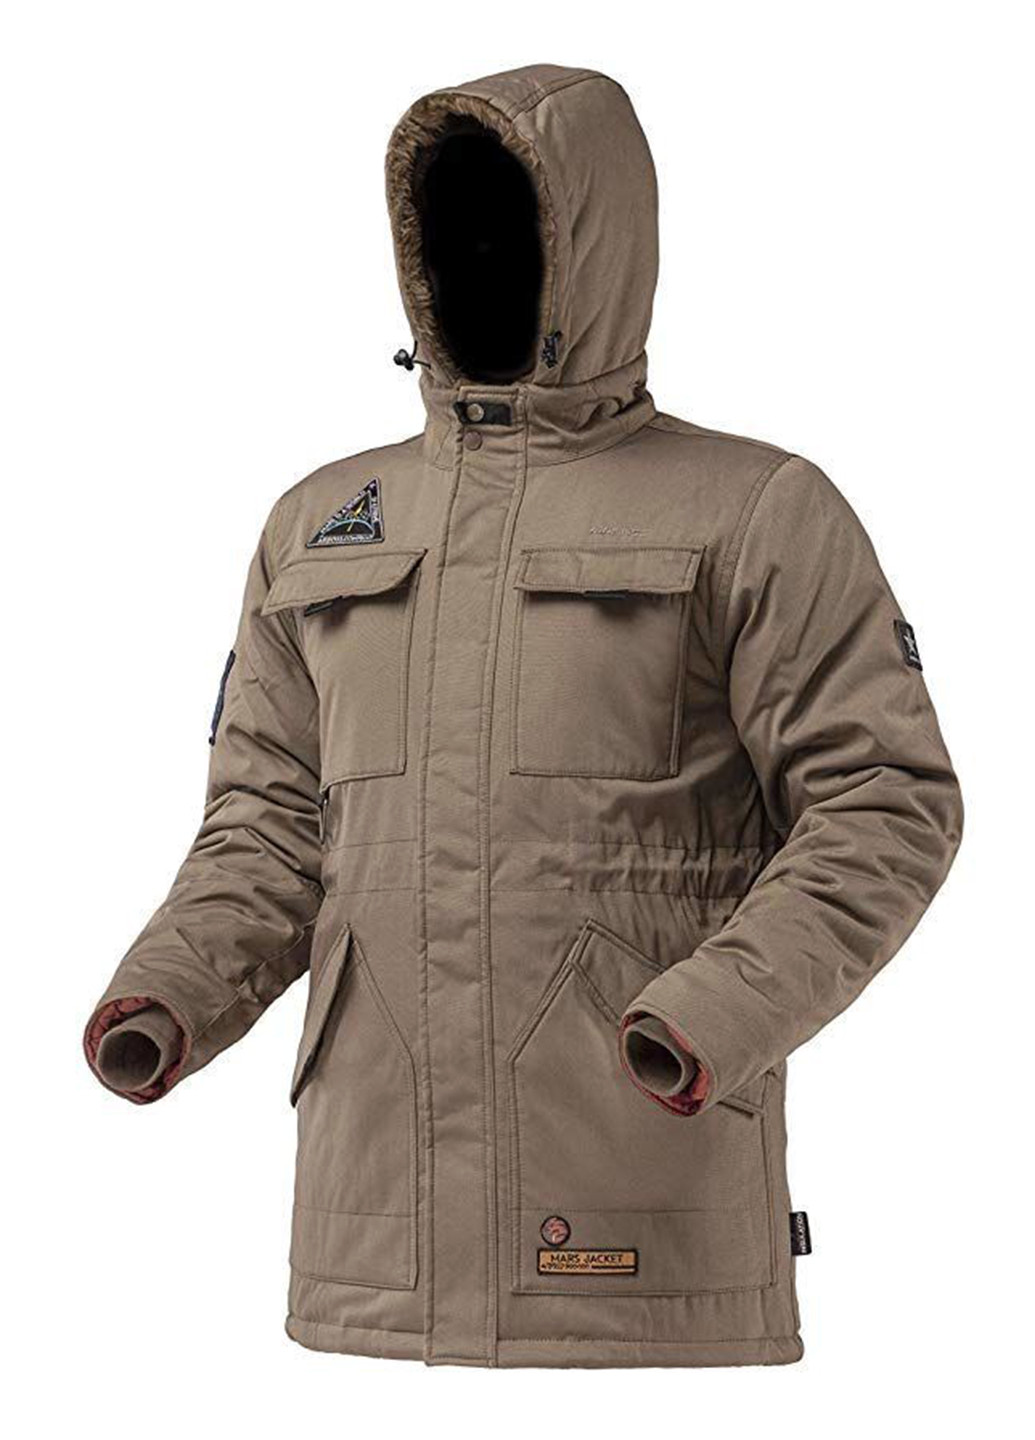 Оливковая (хаки) зимняя куртка Airboss